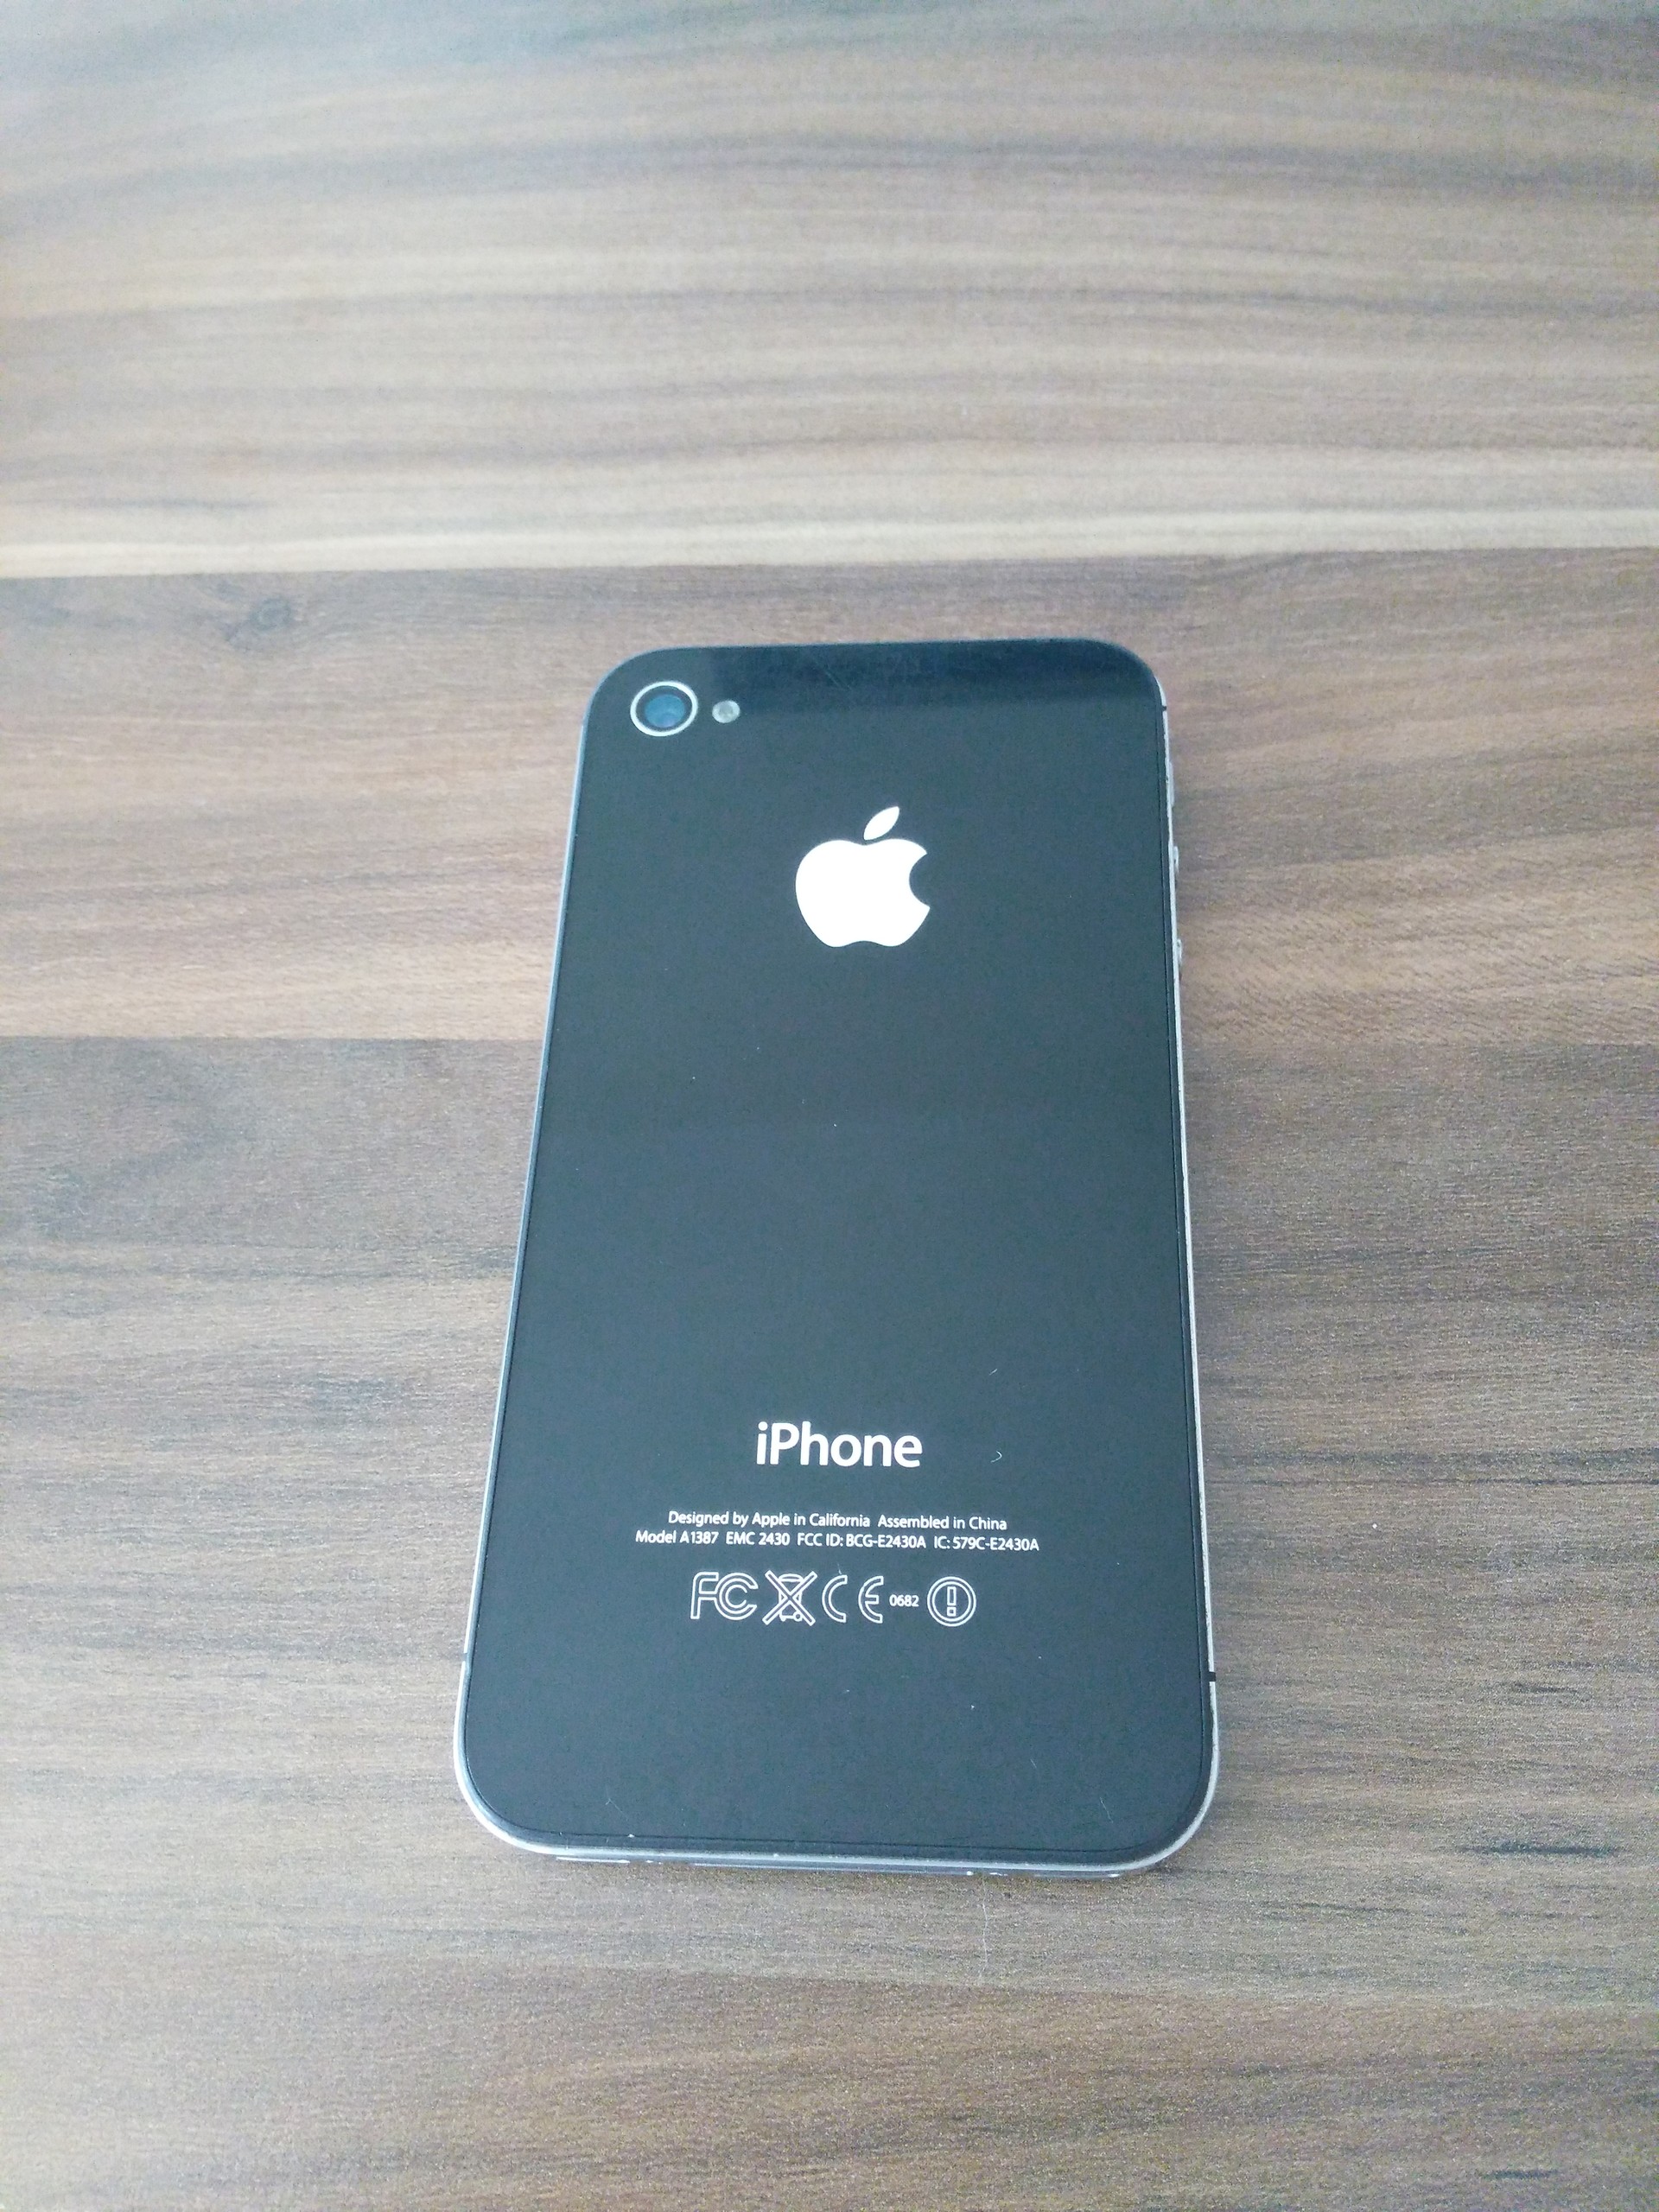 Iphone a. Айфон a1387 EMC. Apple iphone 4s (a1387). Iphone model a1387. Айфон model i332 EMC 380a FCC ID BCG.